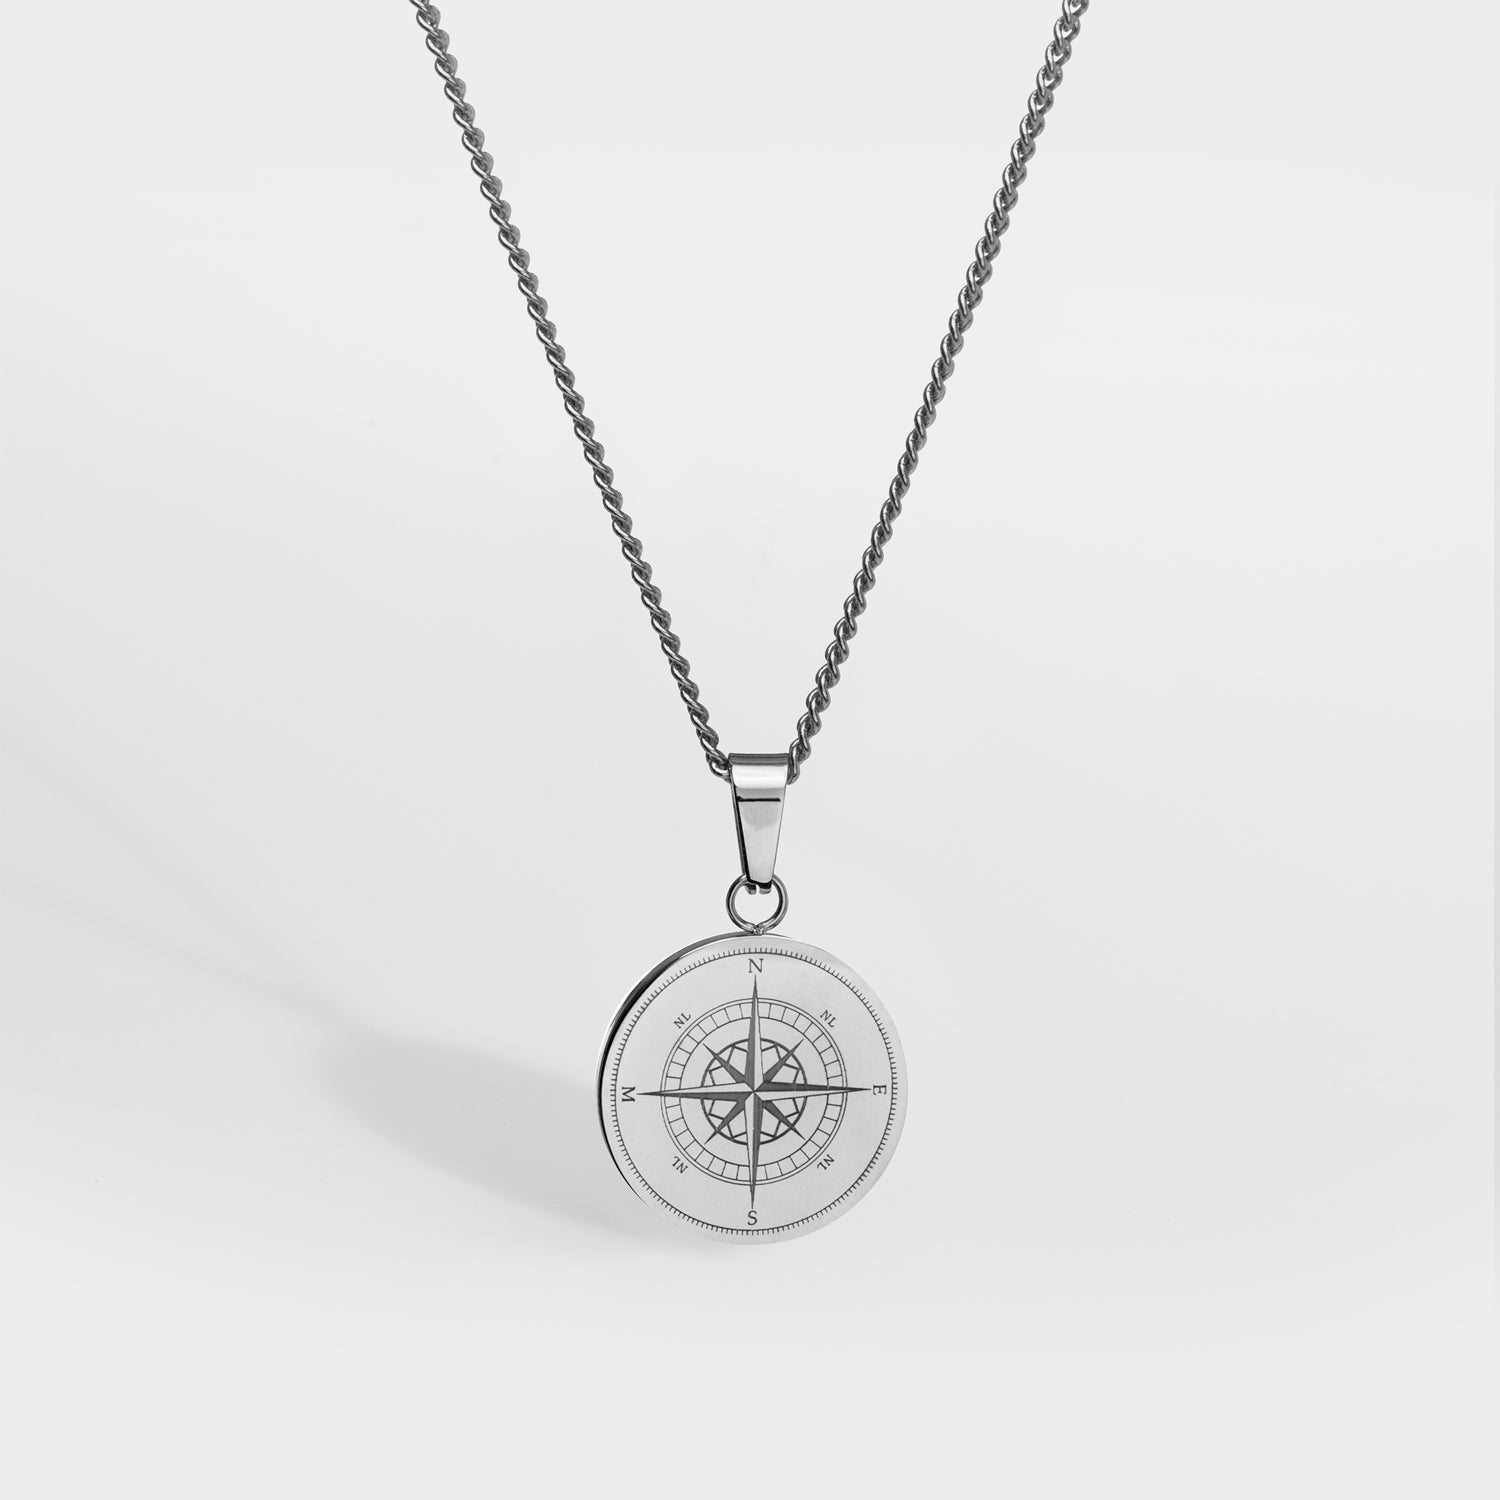 NL Compass pendant - Silver-toned